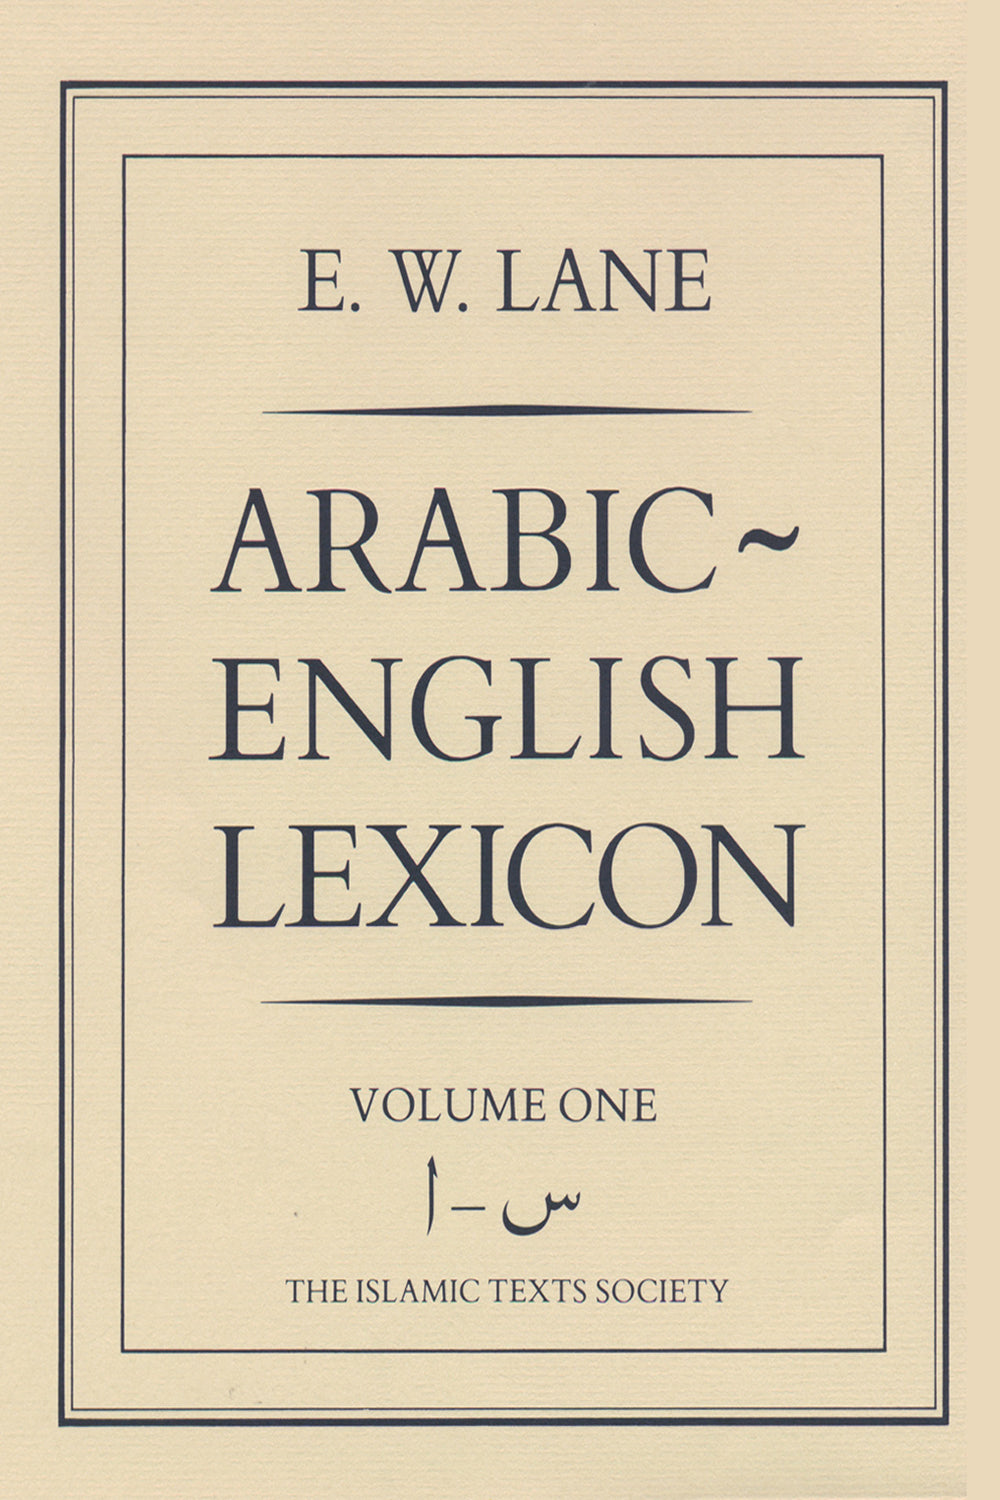 E W LANE'S Arabic-English Lexicon, (Deluxe Set.) 2 Vol. ITS Cambridge